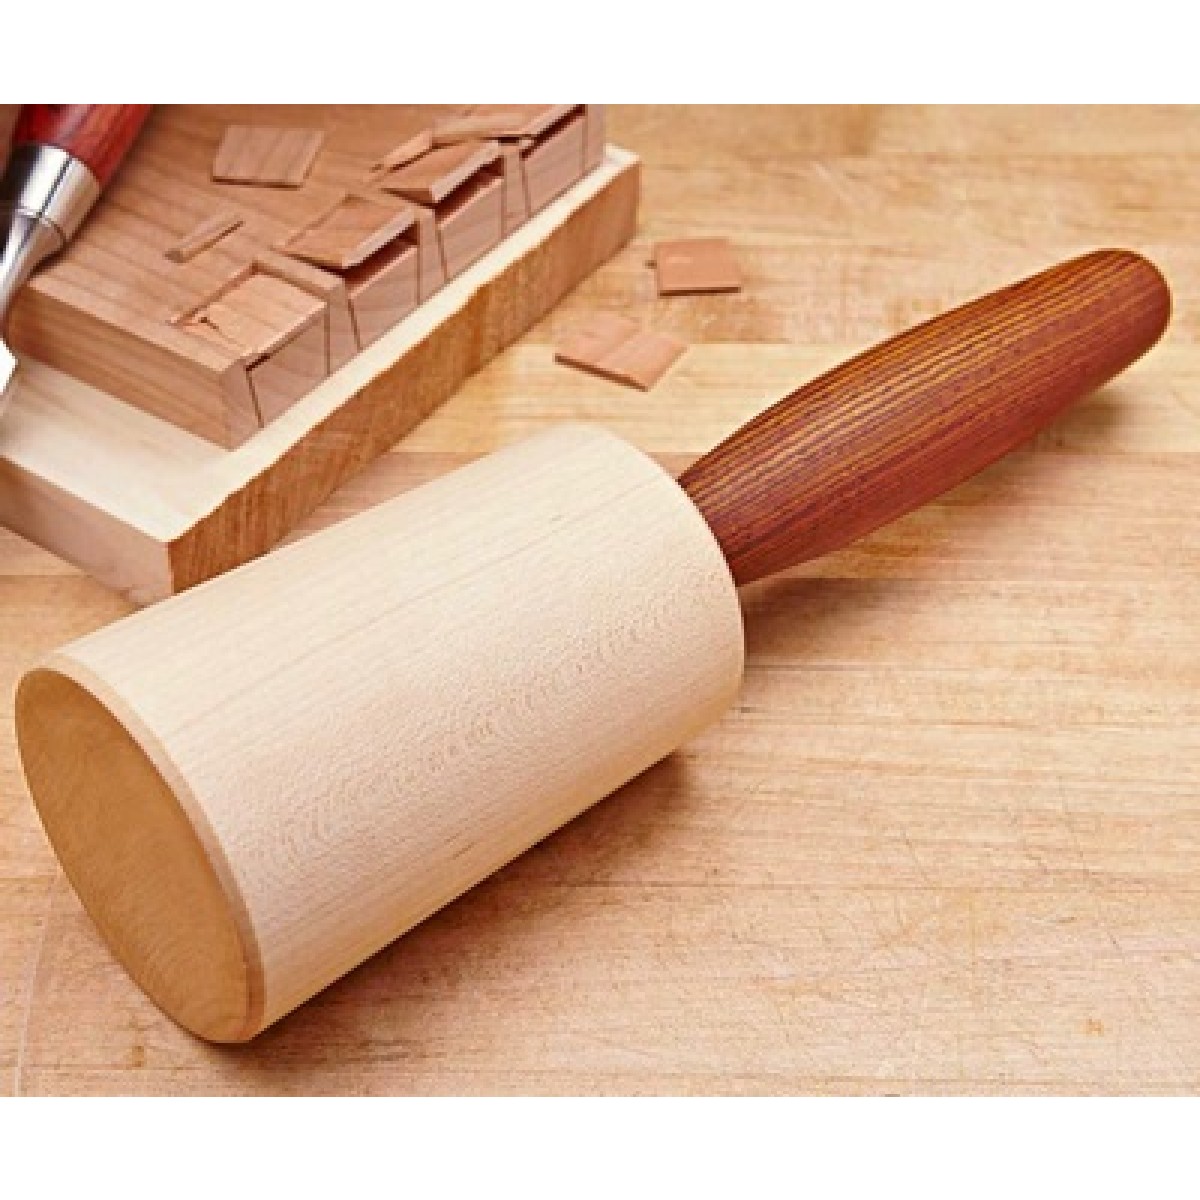 Колотушка инструмент. Толкушка деревянная. Деревянная колотушка. Толкушка для картошки деревянная. Киянка деревянная.